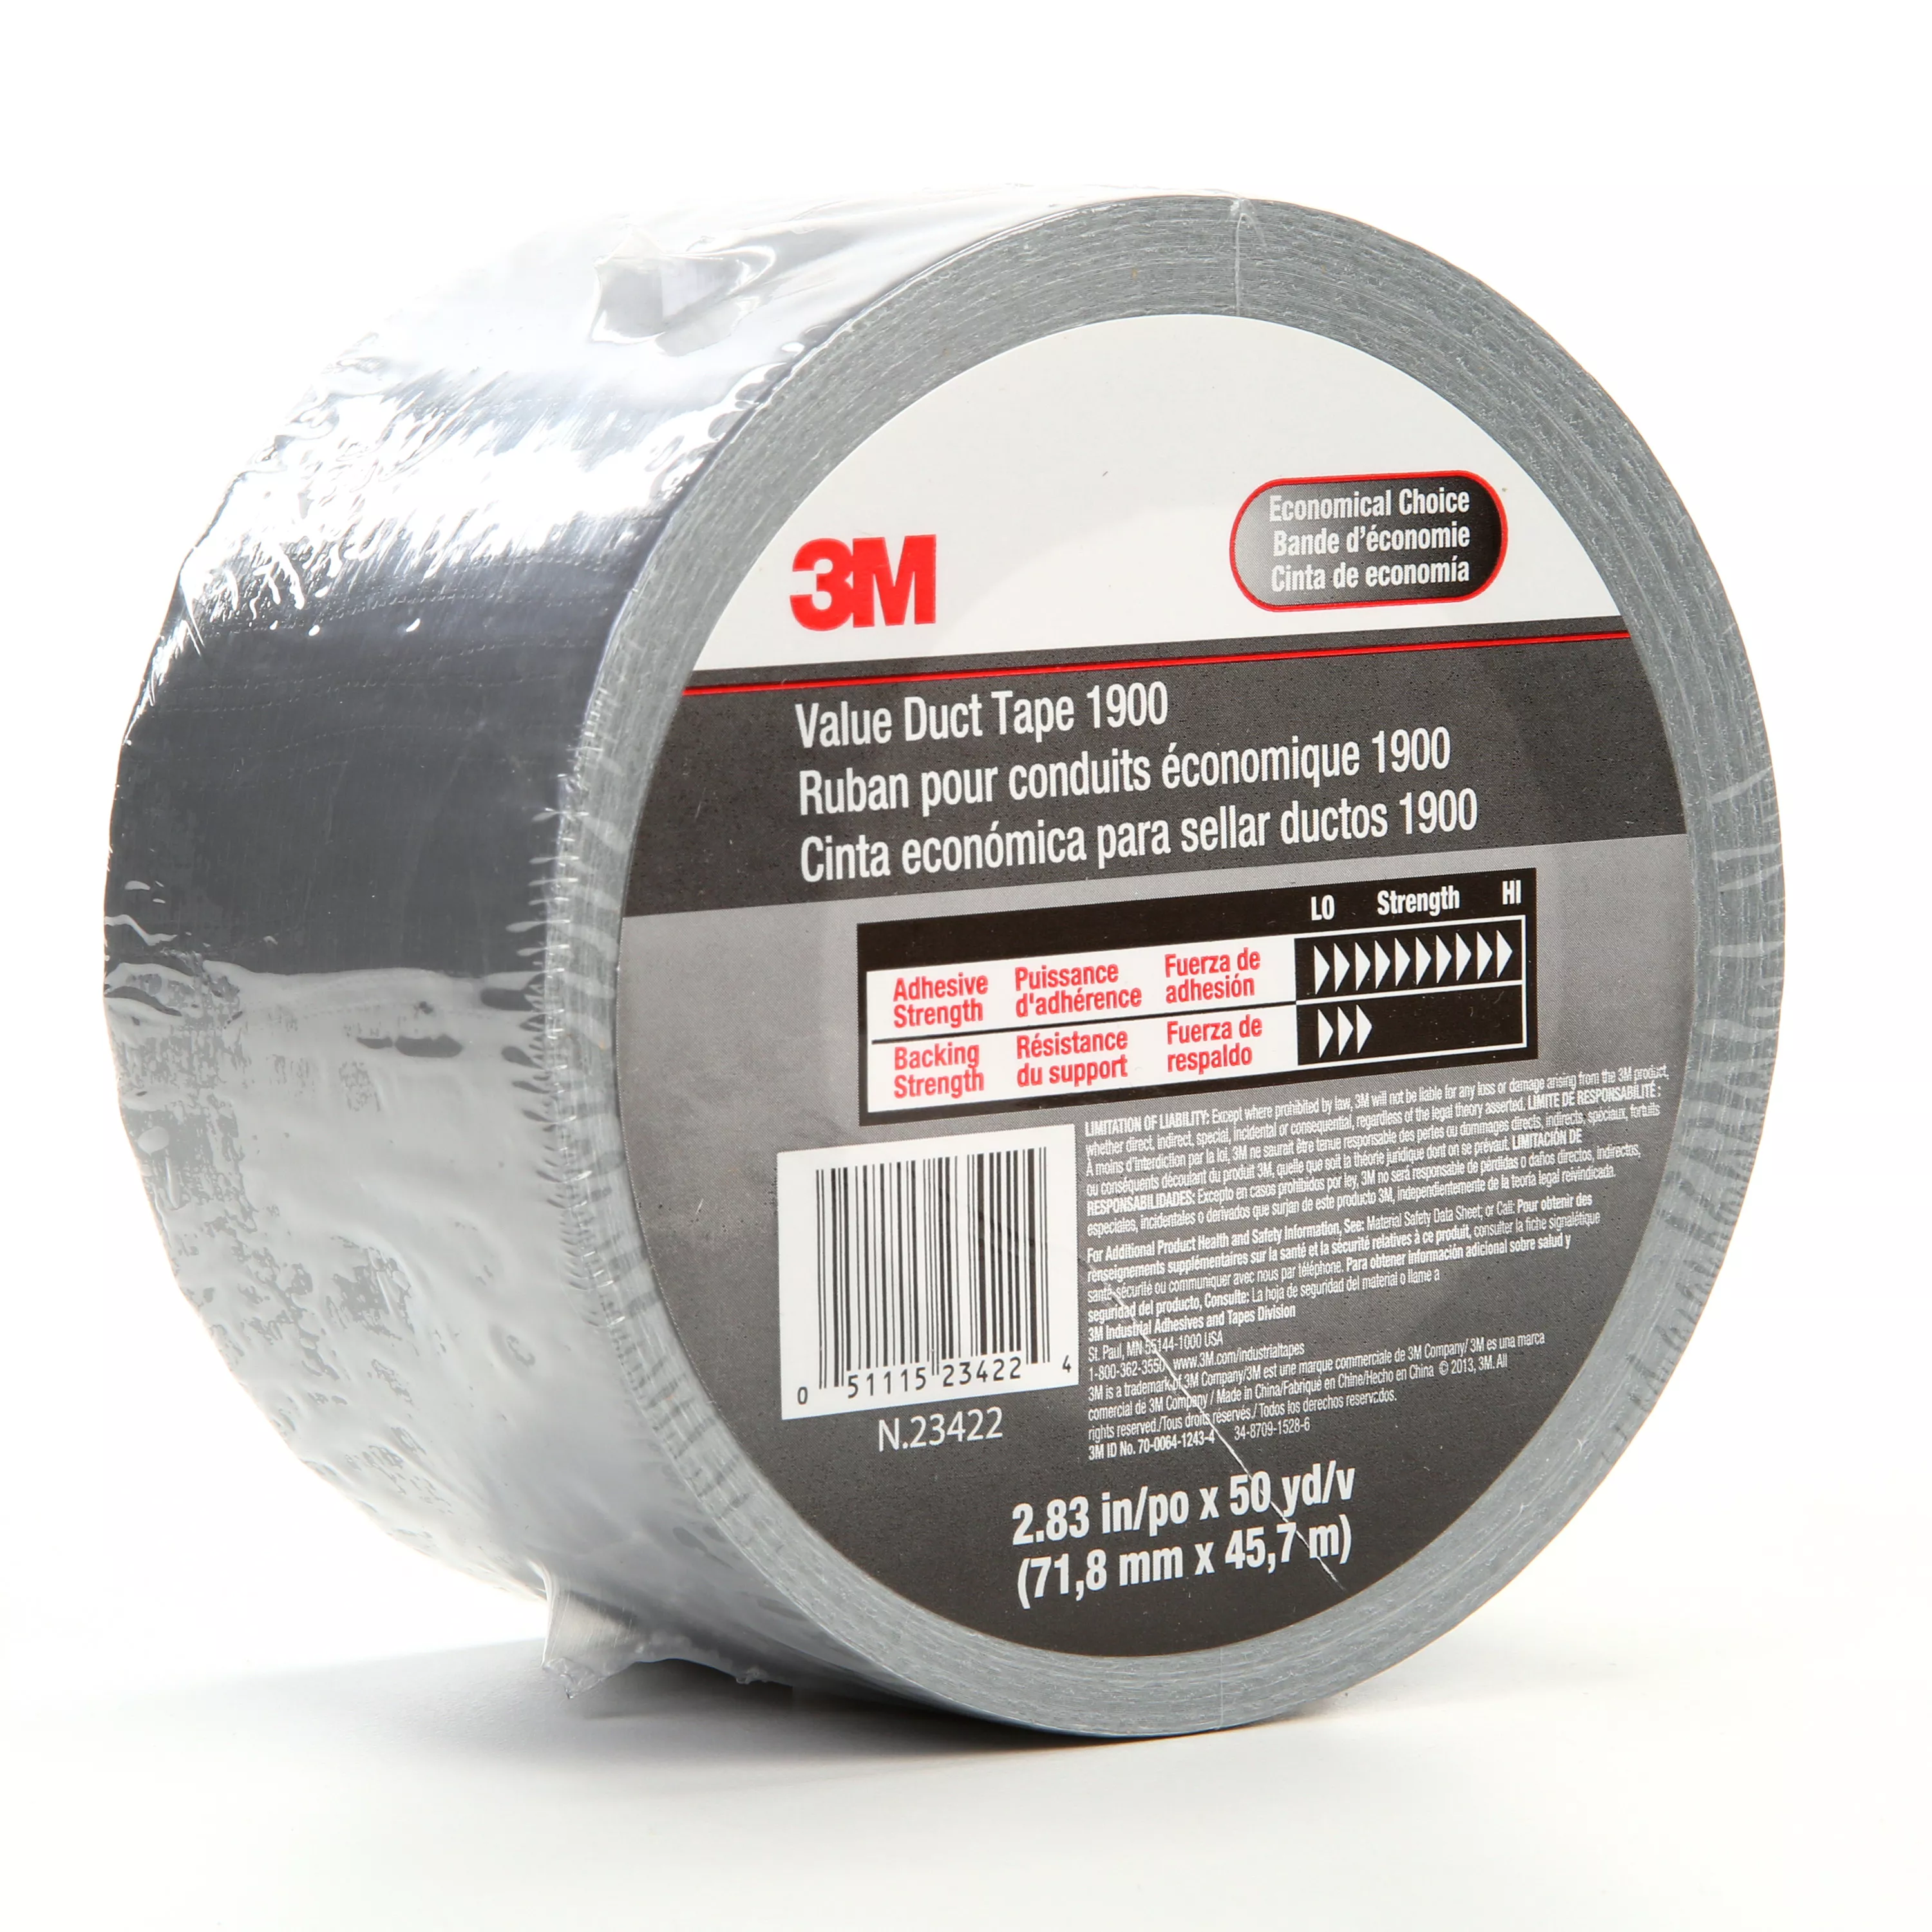 SKU 7000124256 | 3M™ Value Duct Tape 1900